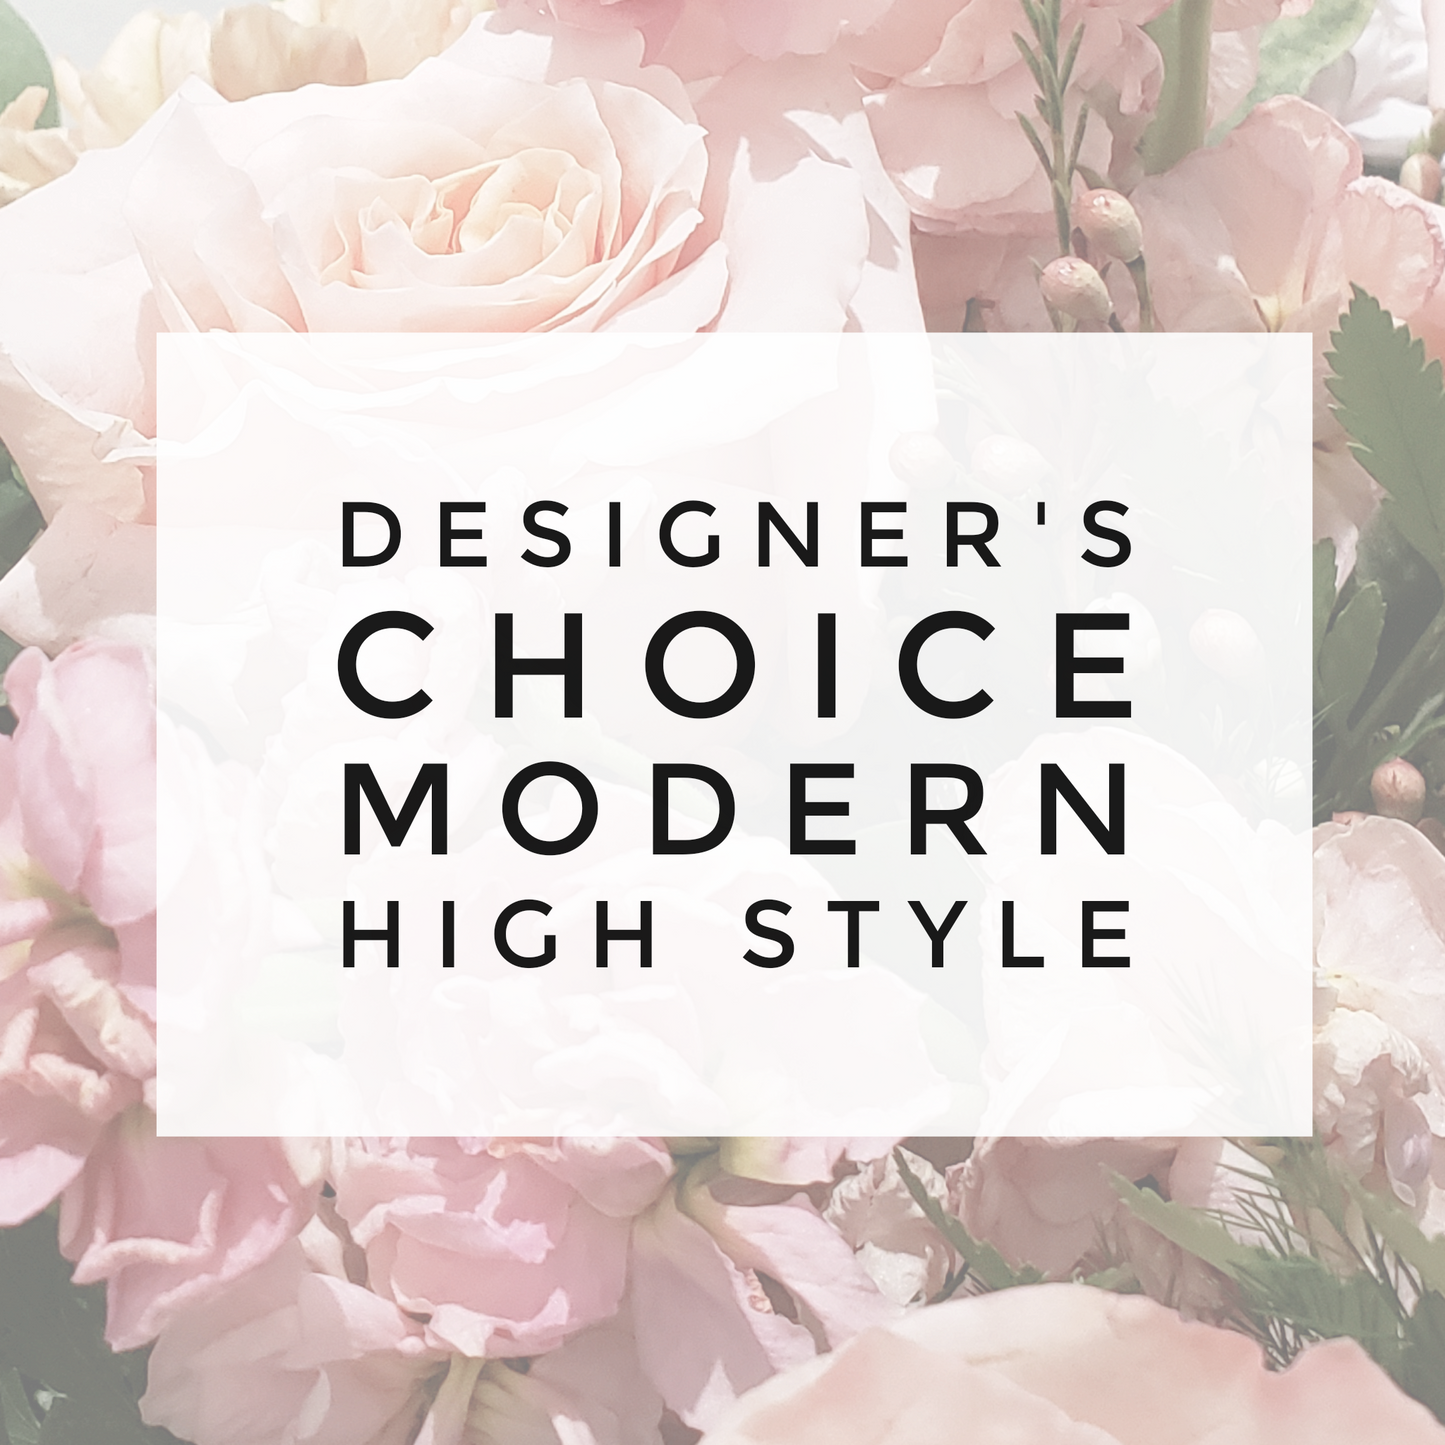 Designer's Choice Modern High Style